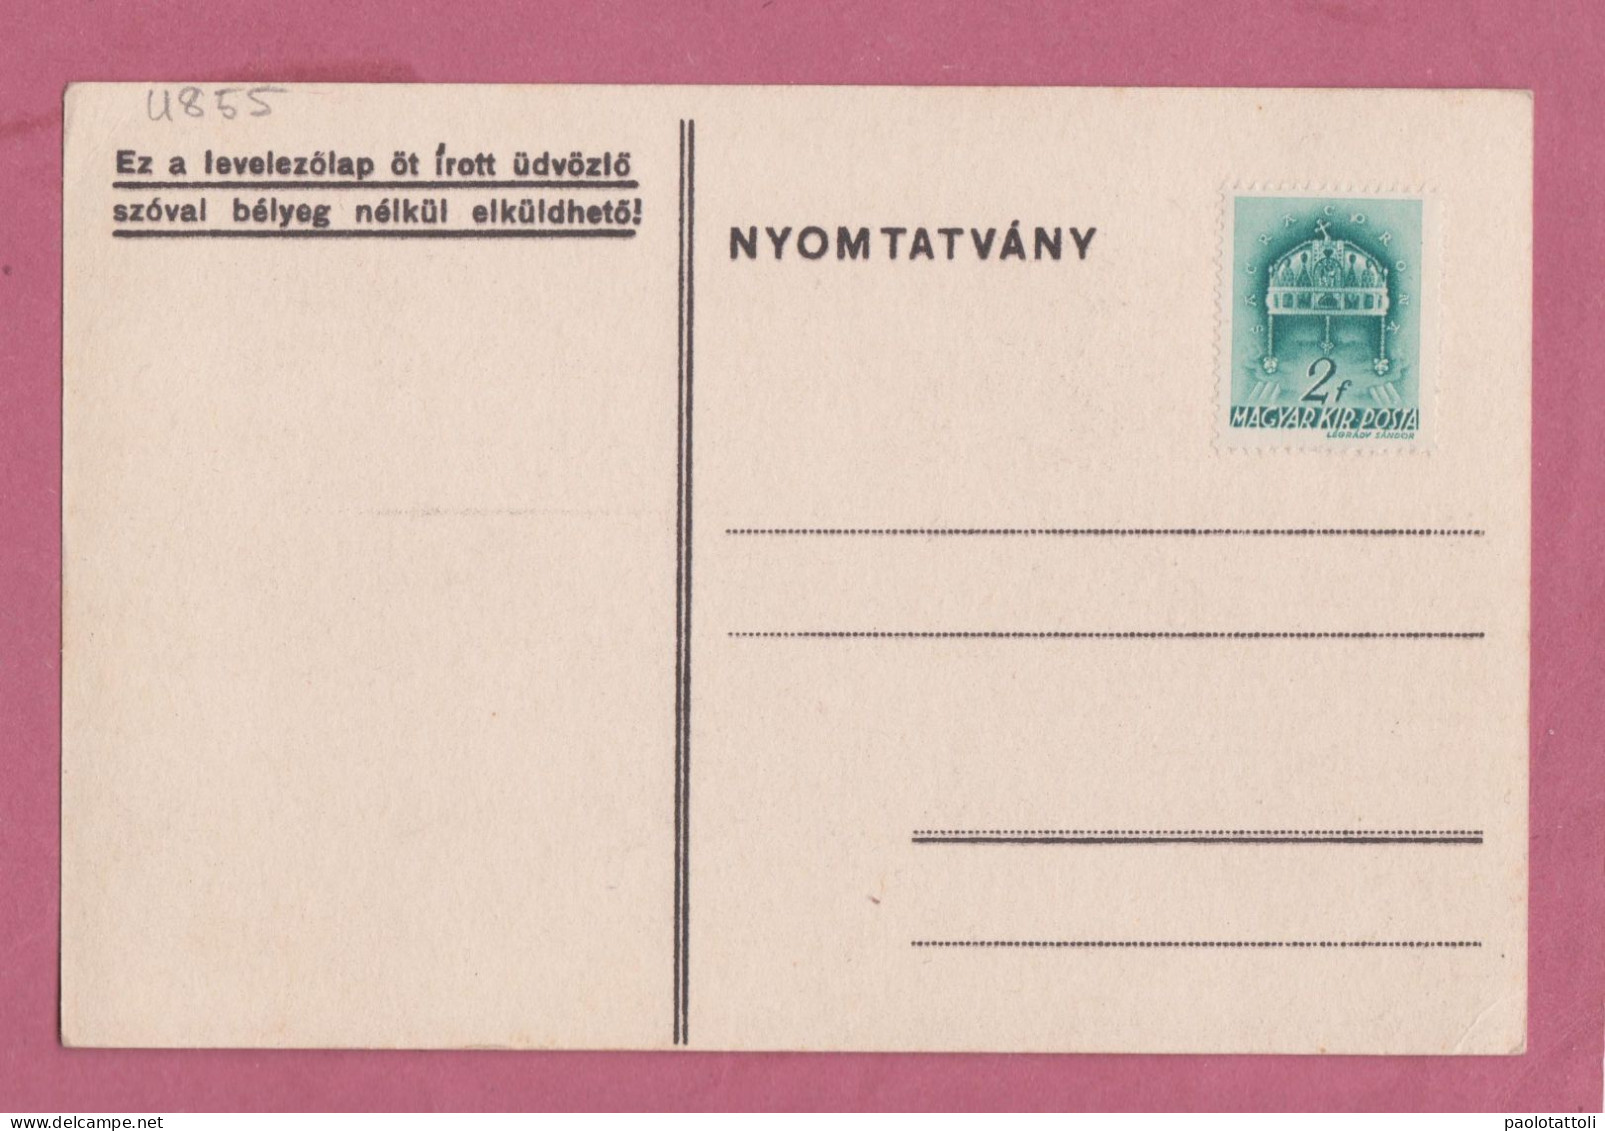 Magyar, Unghery- Propaganda Post Card.- Proteggi Il Tuo Raccolto Dal Gelo.protect Your Crop Against Frostbite- - Partidos Politicos & Elecciones